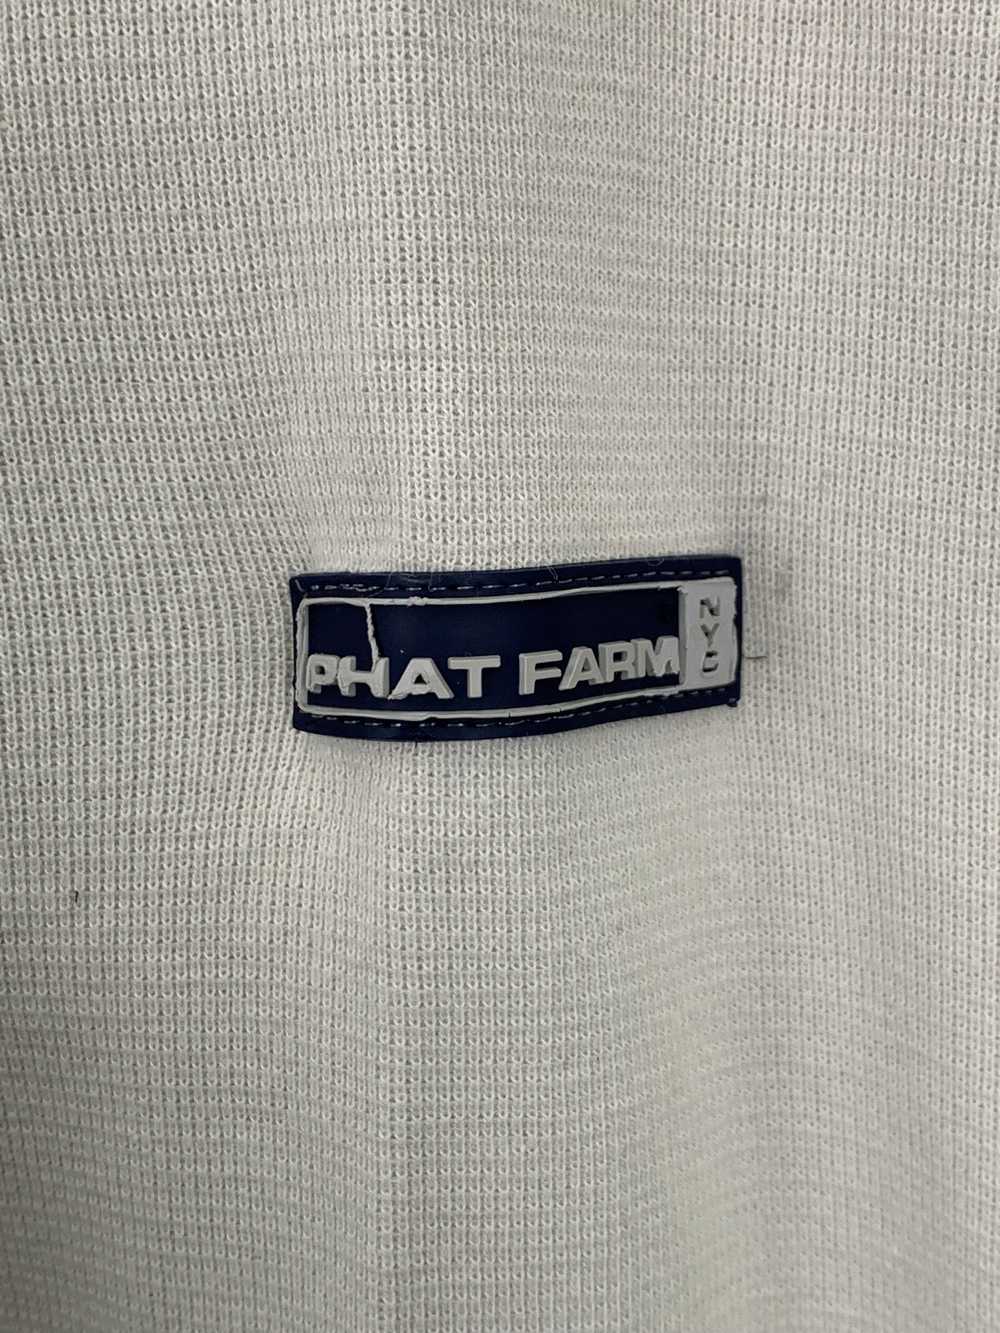 Vintage - Vintage 90s Phat Farm T Shirt - image 3